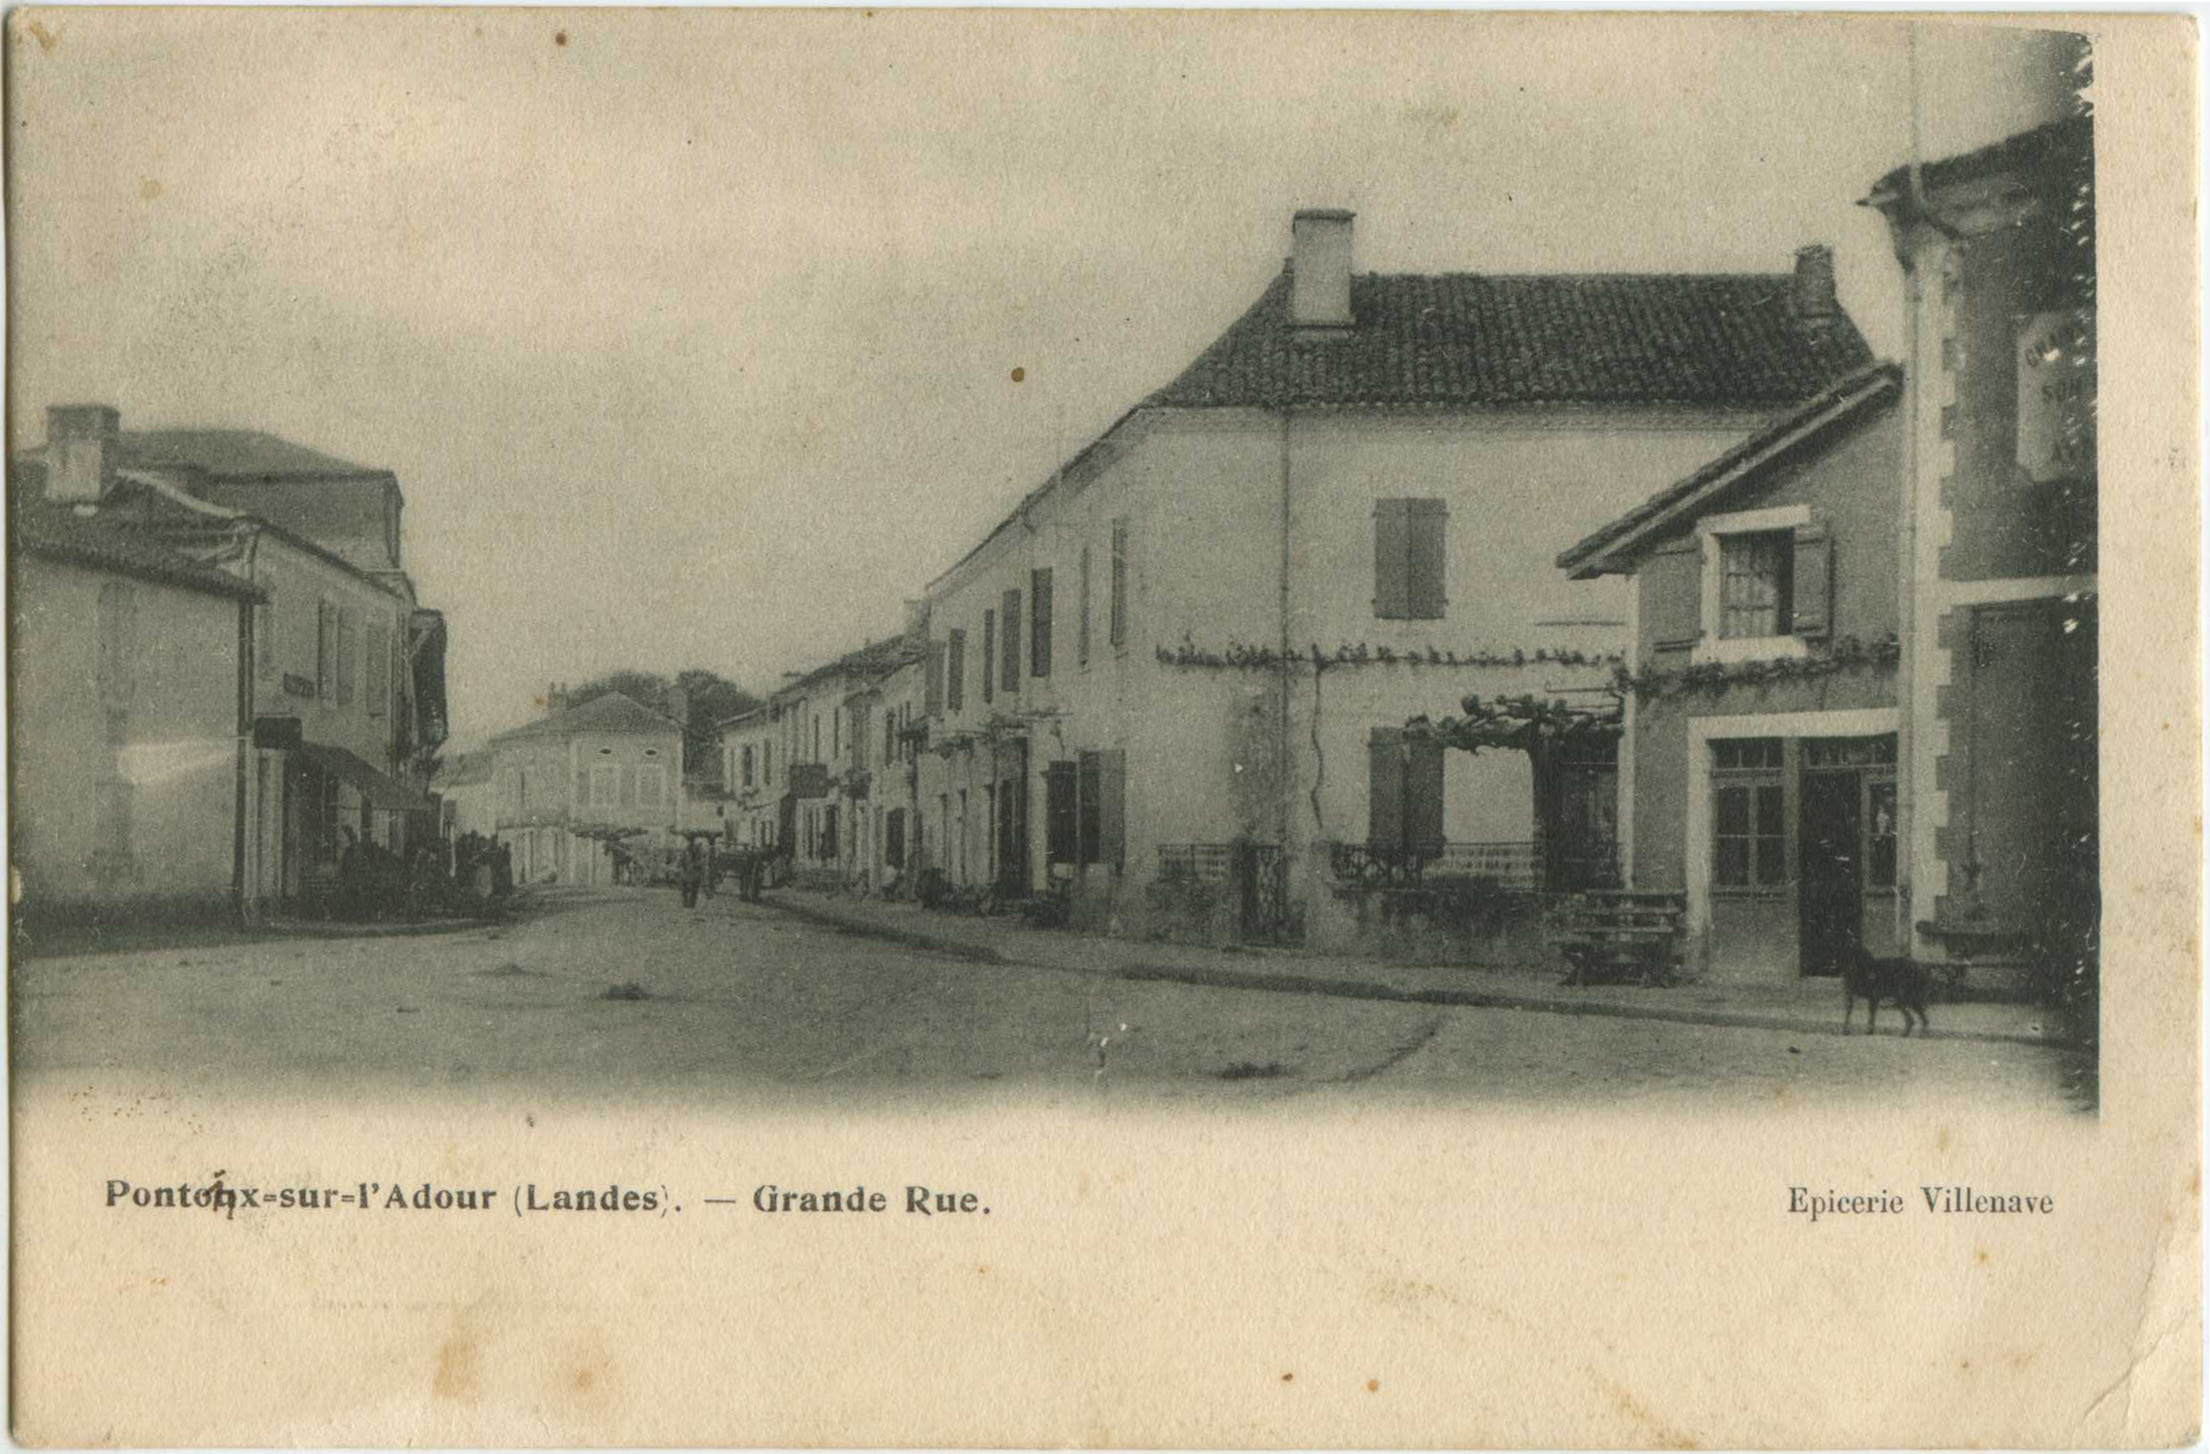 Pontonx-sur-l'Adour - Grande Rue